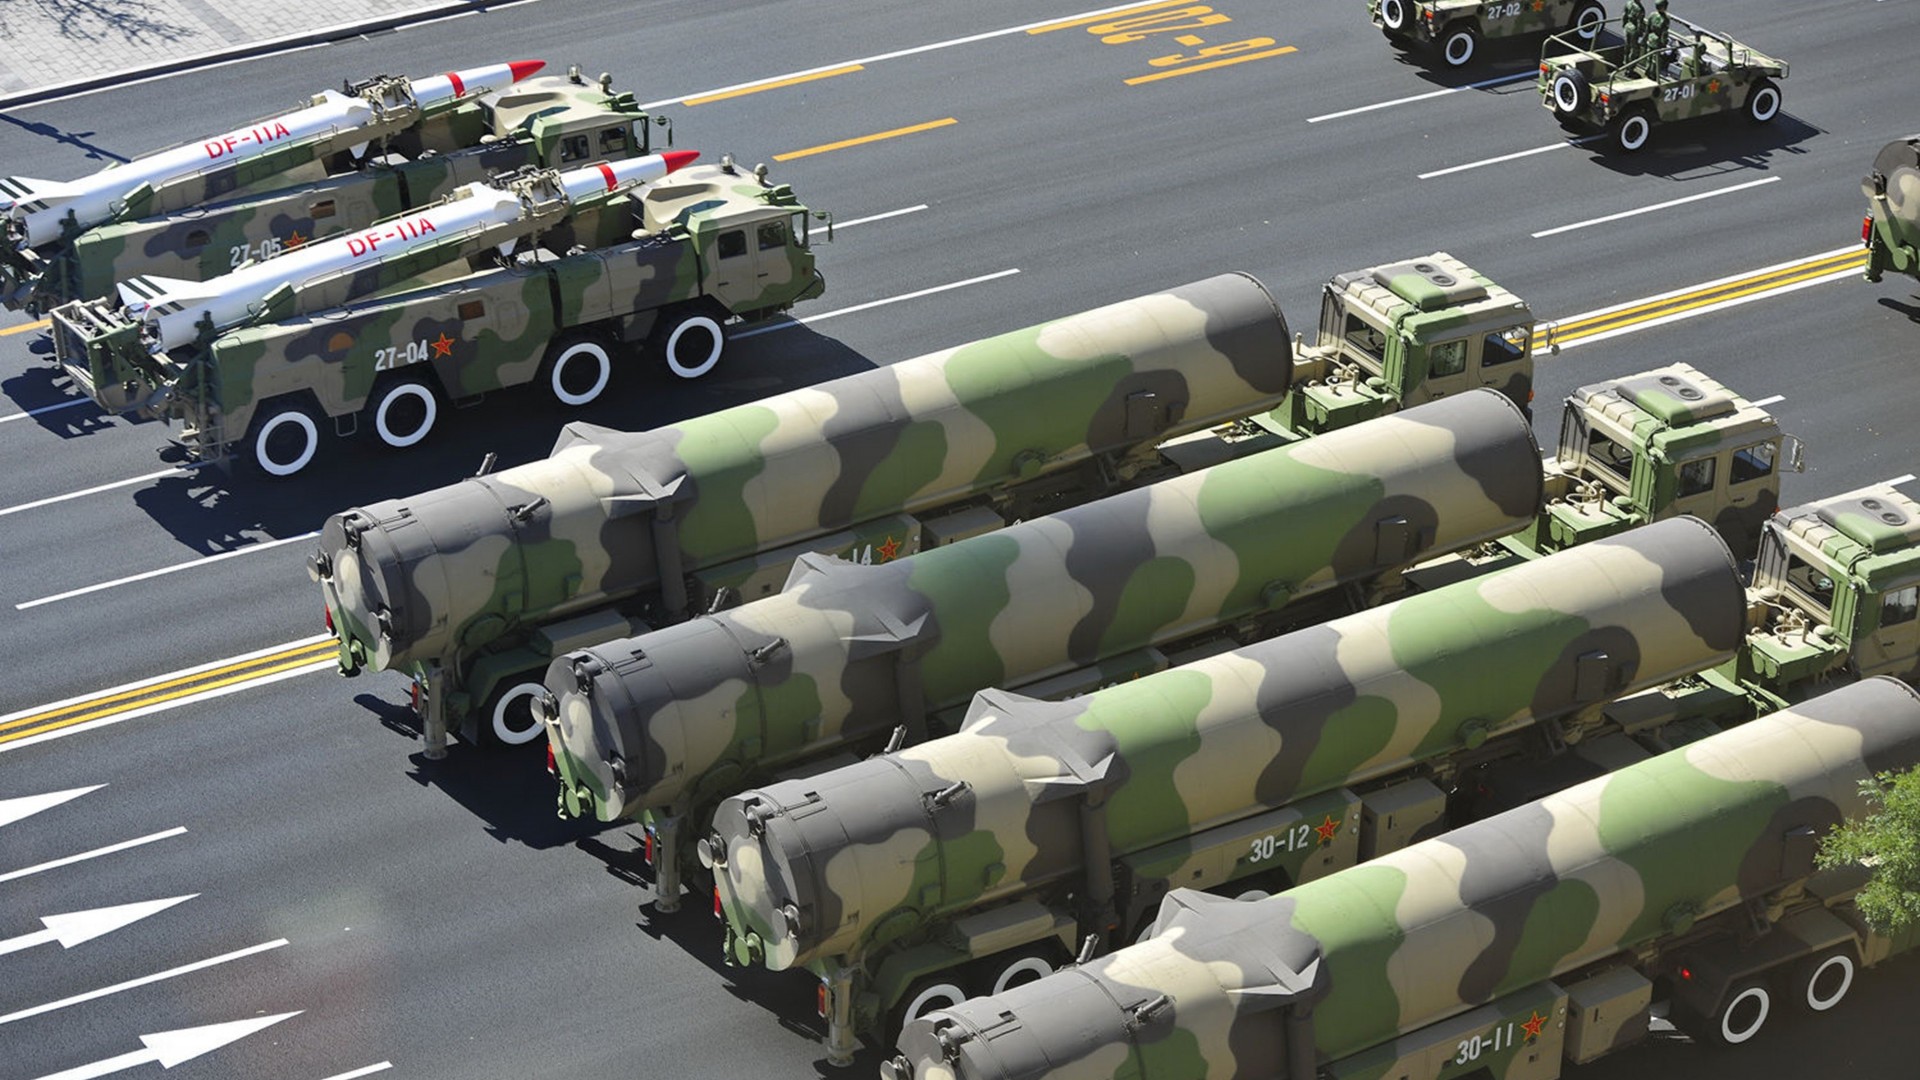 Дунфэн-21, парад, РК, ракета, Китай, КНР, DF-21, missile, DF-21, parade, Dong-Feng, MRBM, People's Liberation Army, China, weapon (horizontal)